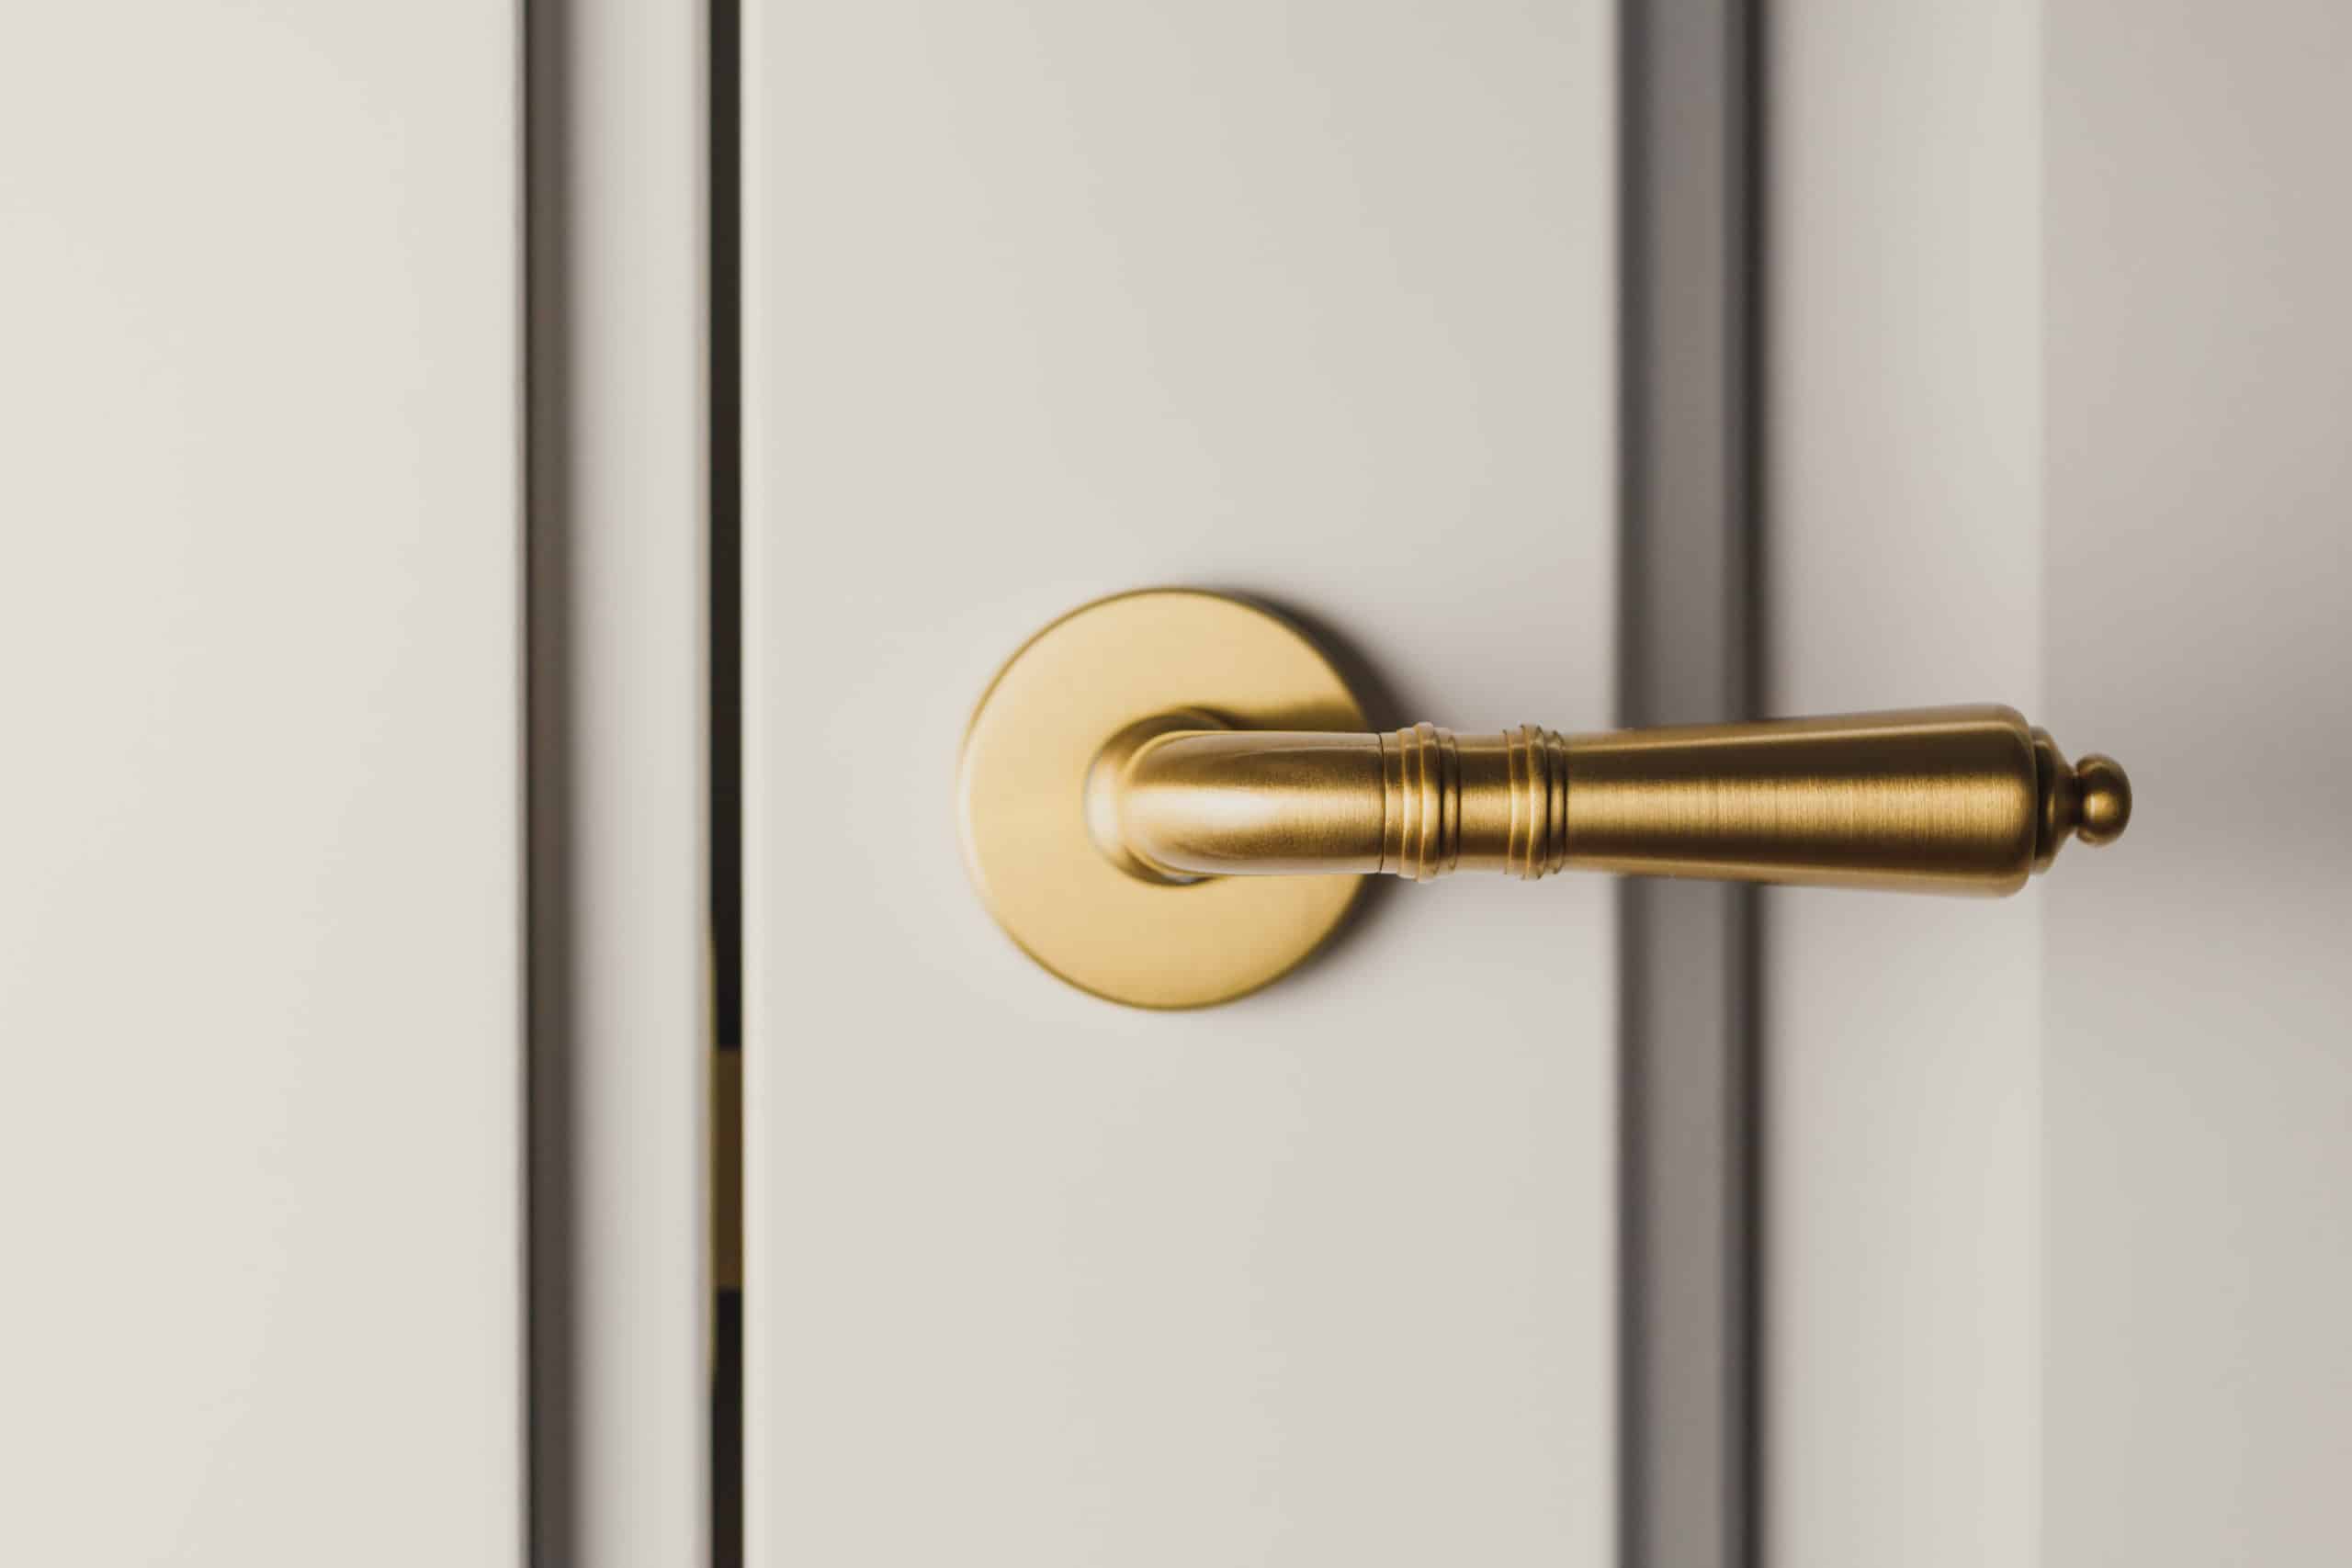 Brushed gold modern design in vintage style door handle on a white door.